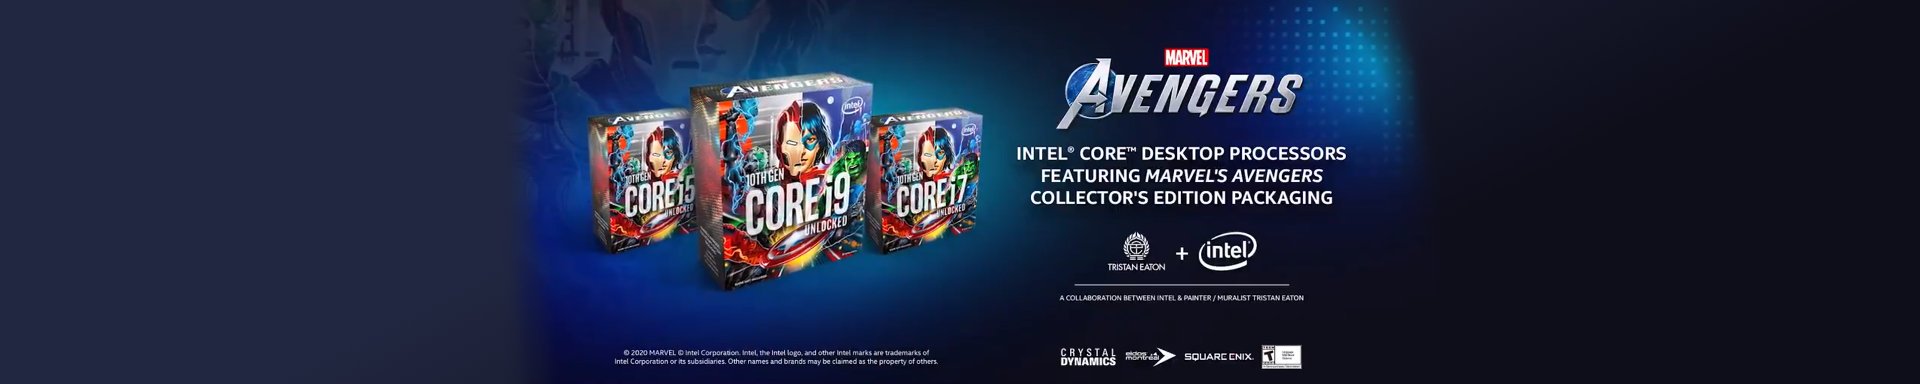 IMarvel's Avengers Intel i9 Collector's Edition yokuPakisha isilayi